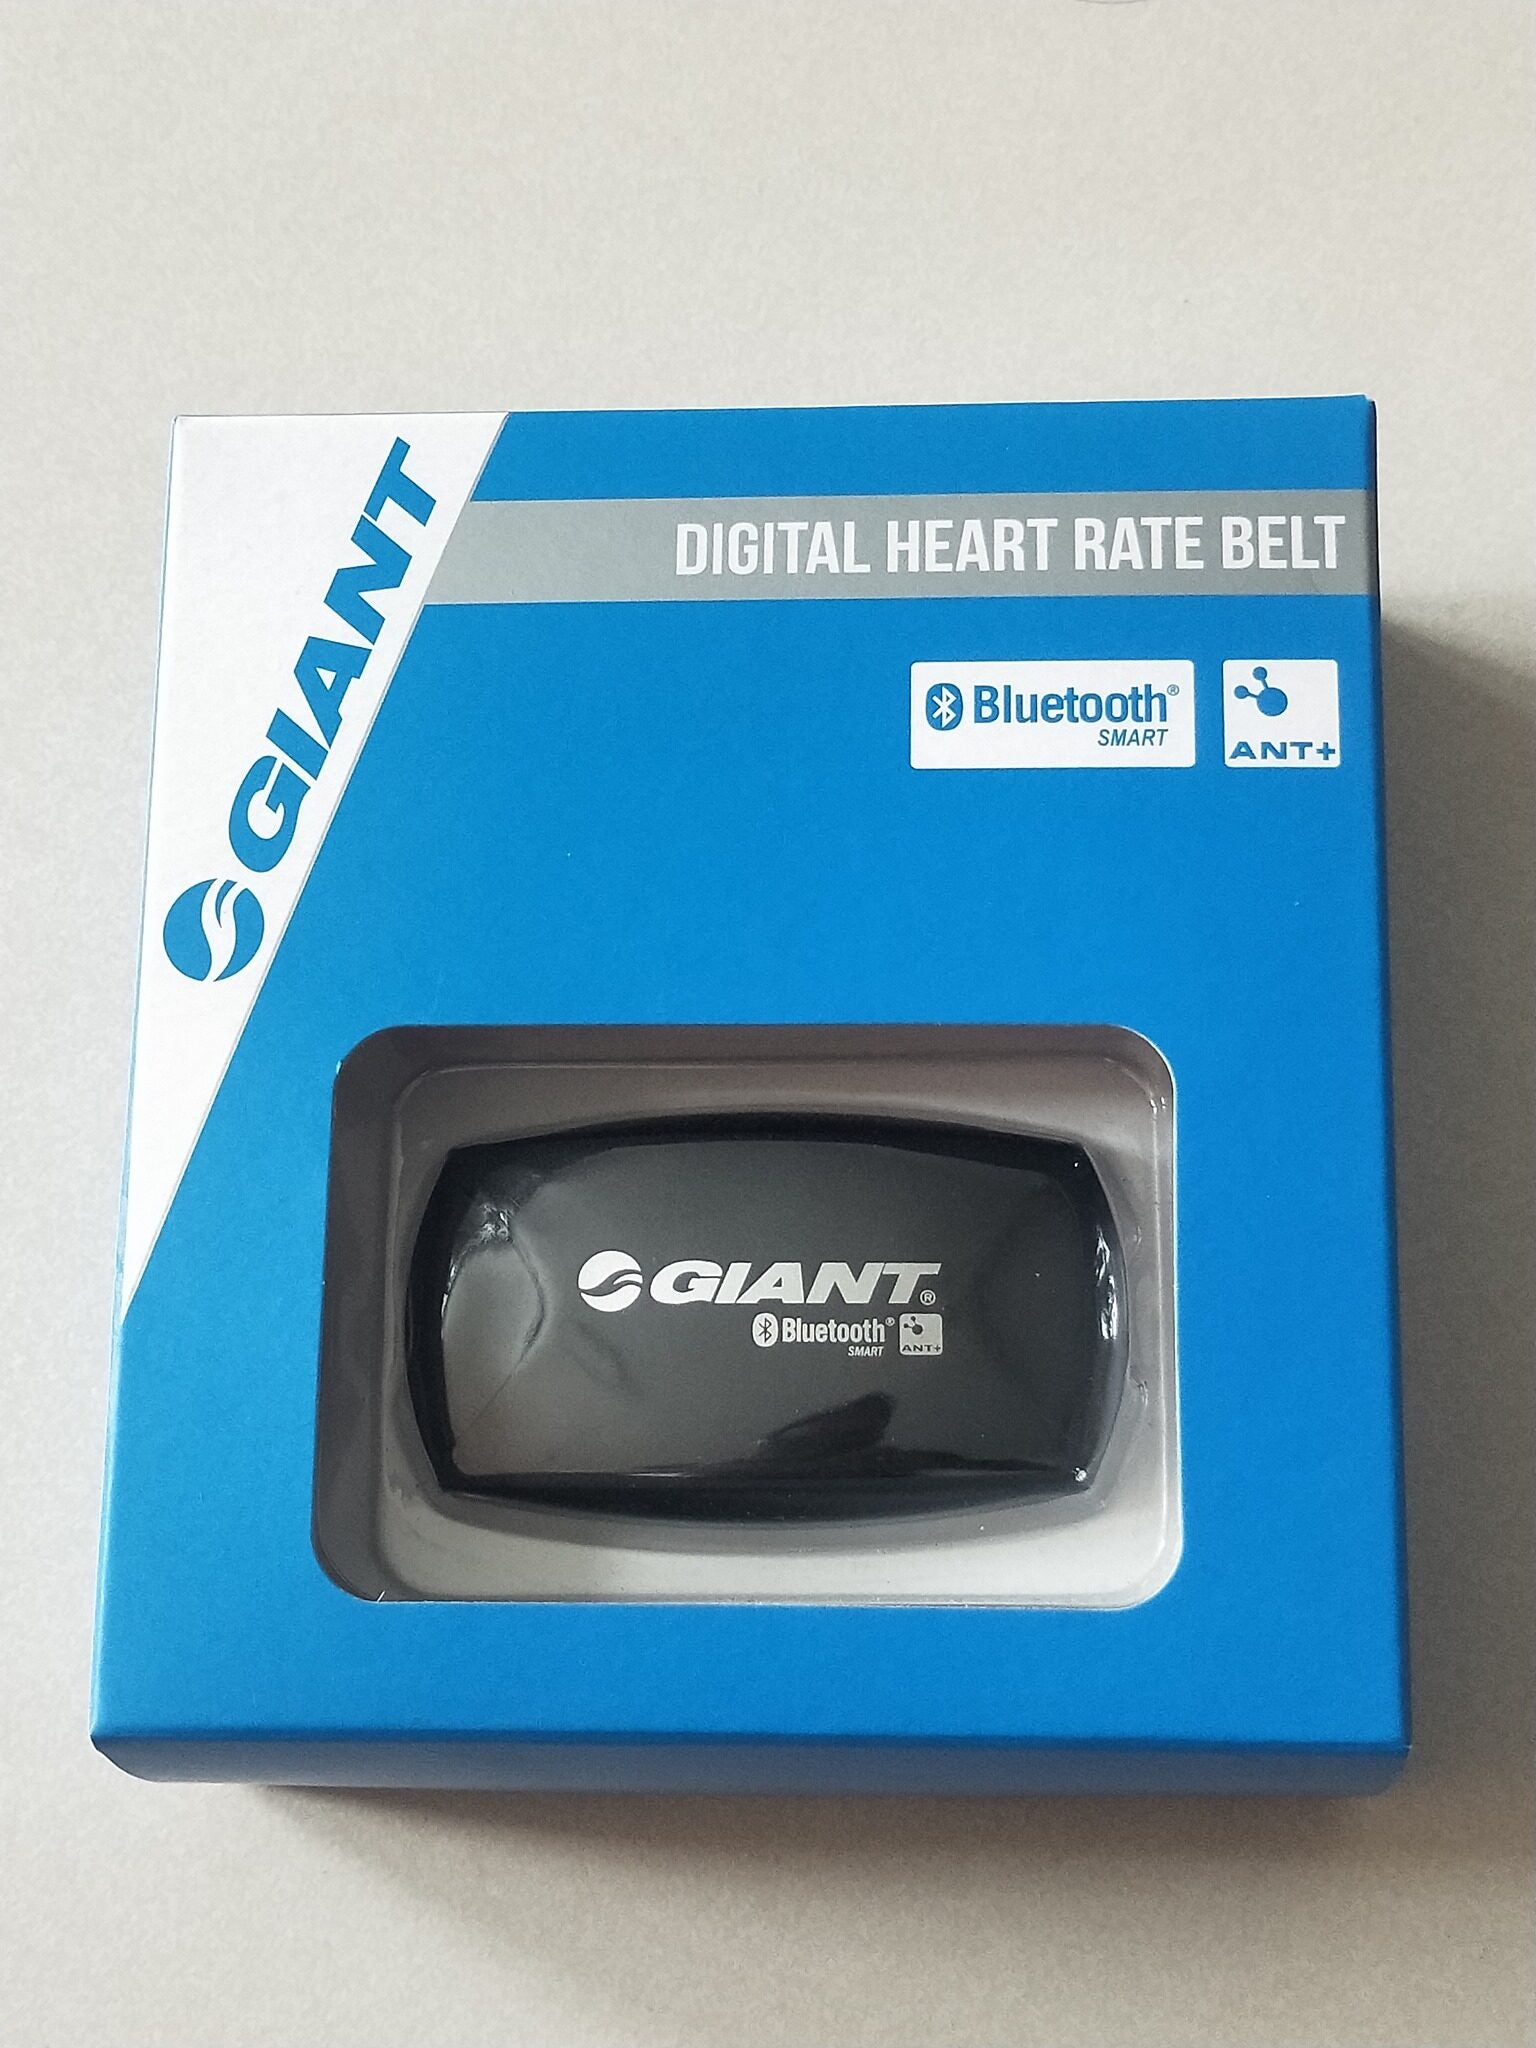 Giant Digital Heart Rate Belt